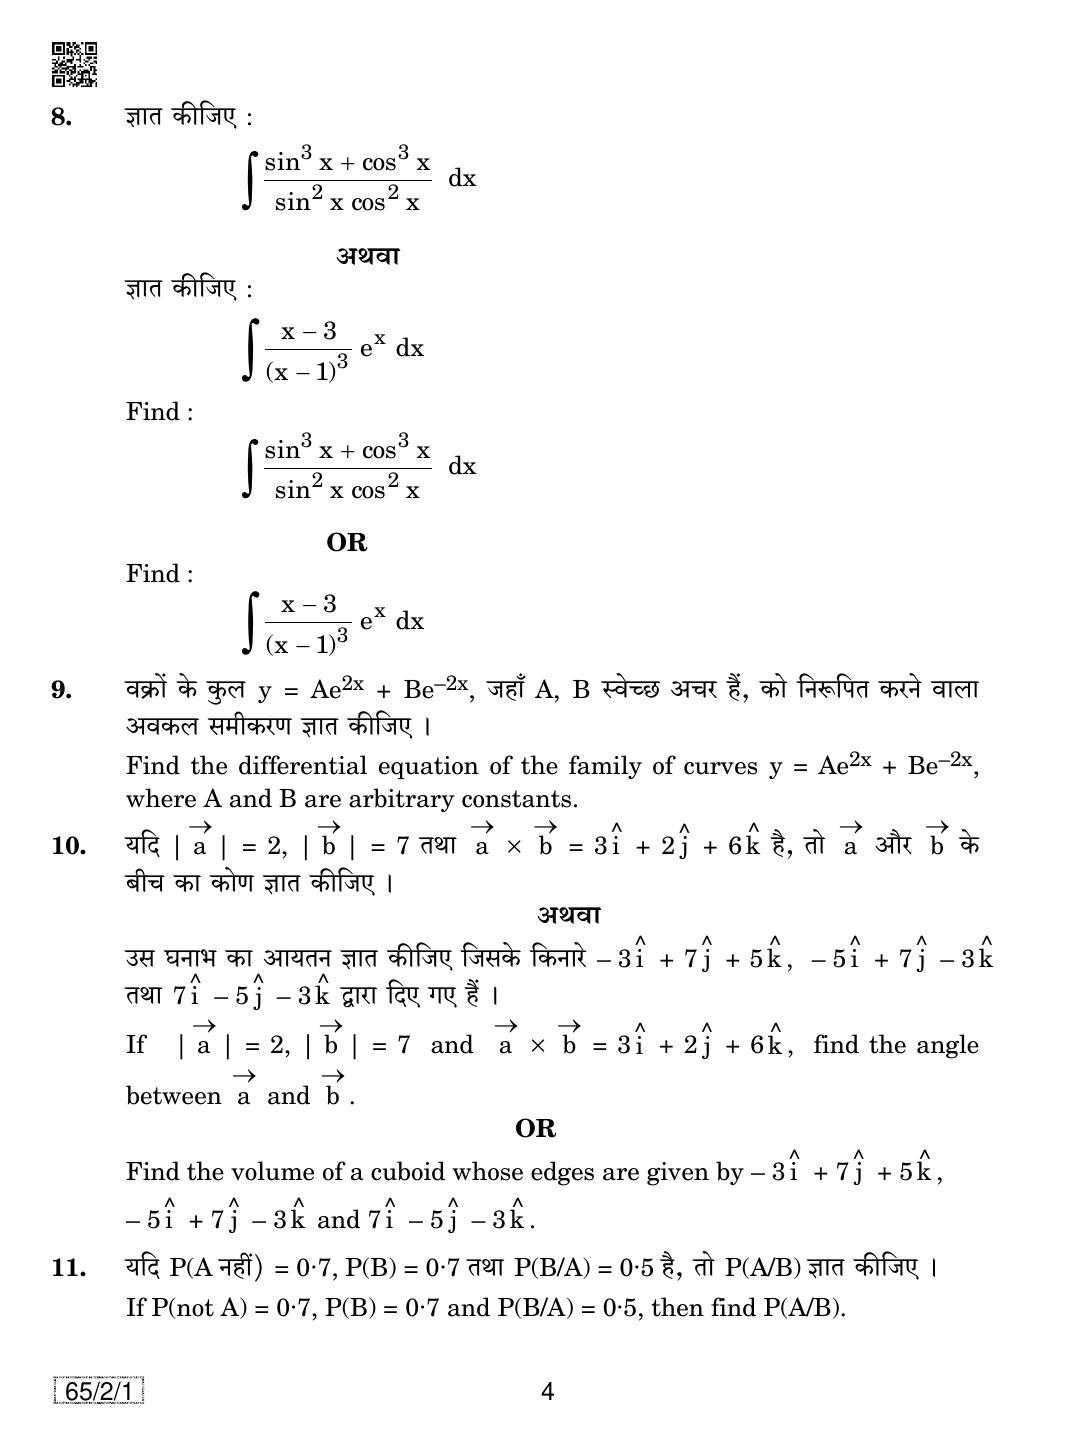 CBSE Class 12 65-2-1 Mathematics 2019 Question Paper - Page 4